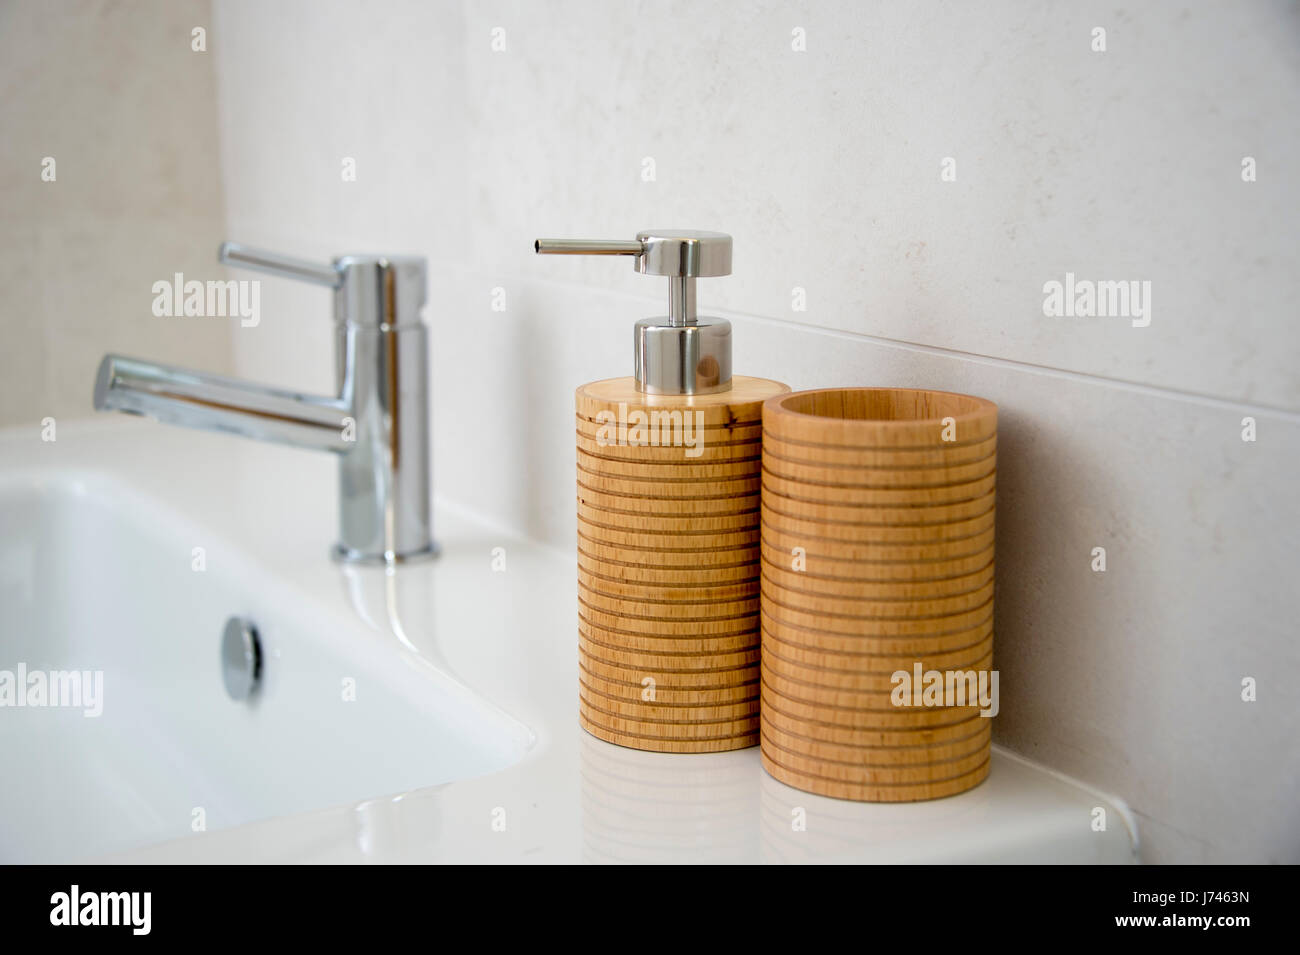 https://c8.alamy.com/comp/J7463N/soap-dispenser-and-toothbrush-holder-on-a-bathroom-sink-J7463N.jpg